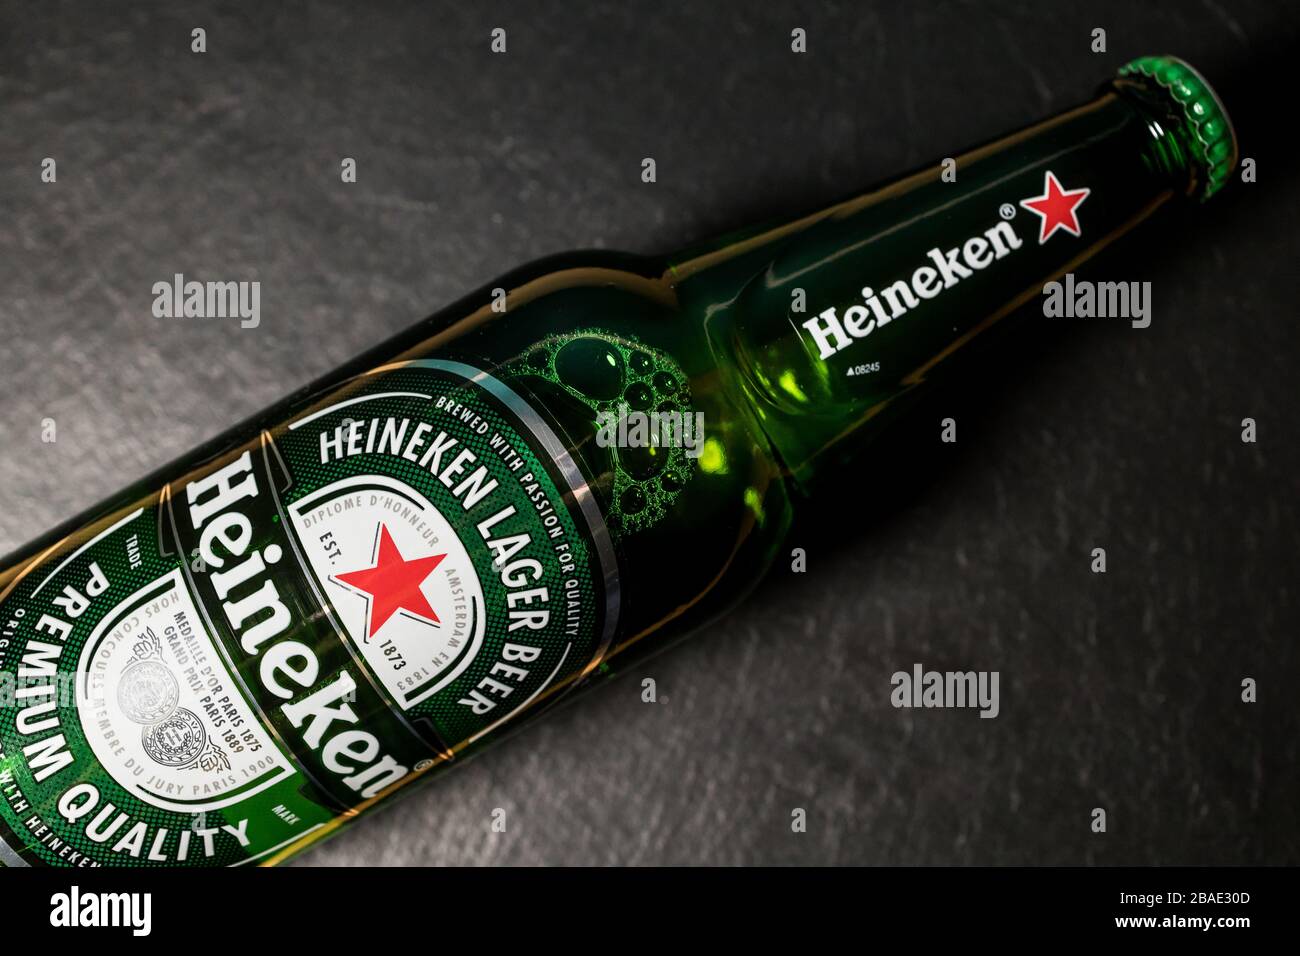 LONDON - MARCH 11, 2020: Heineken lager beer bottle on dark background Stock Photo